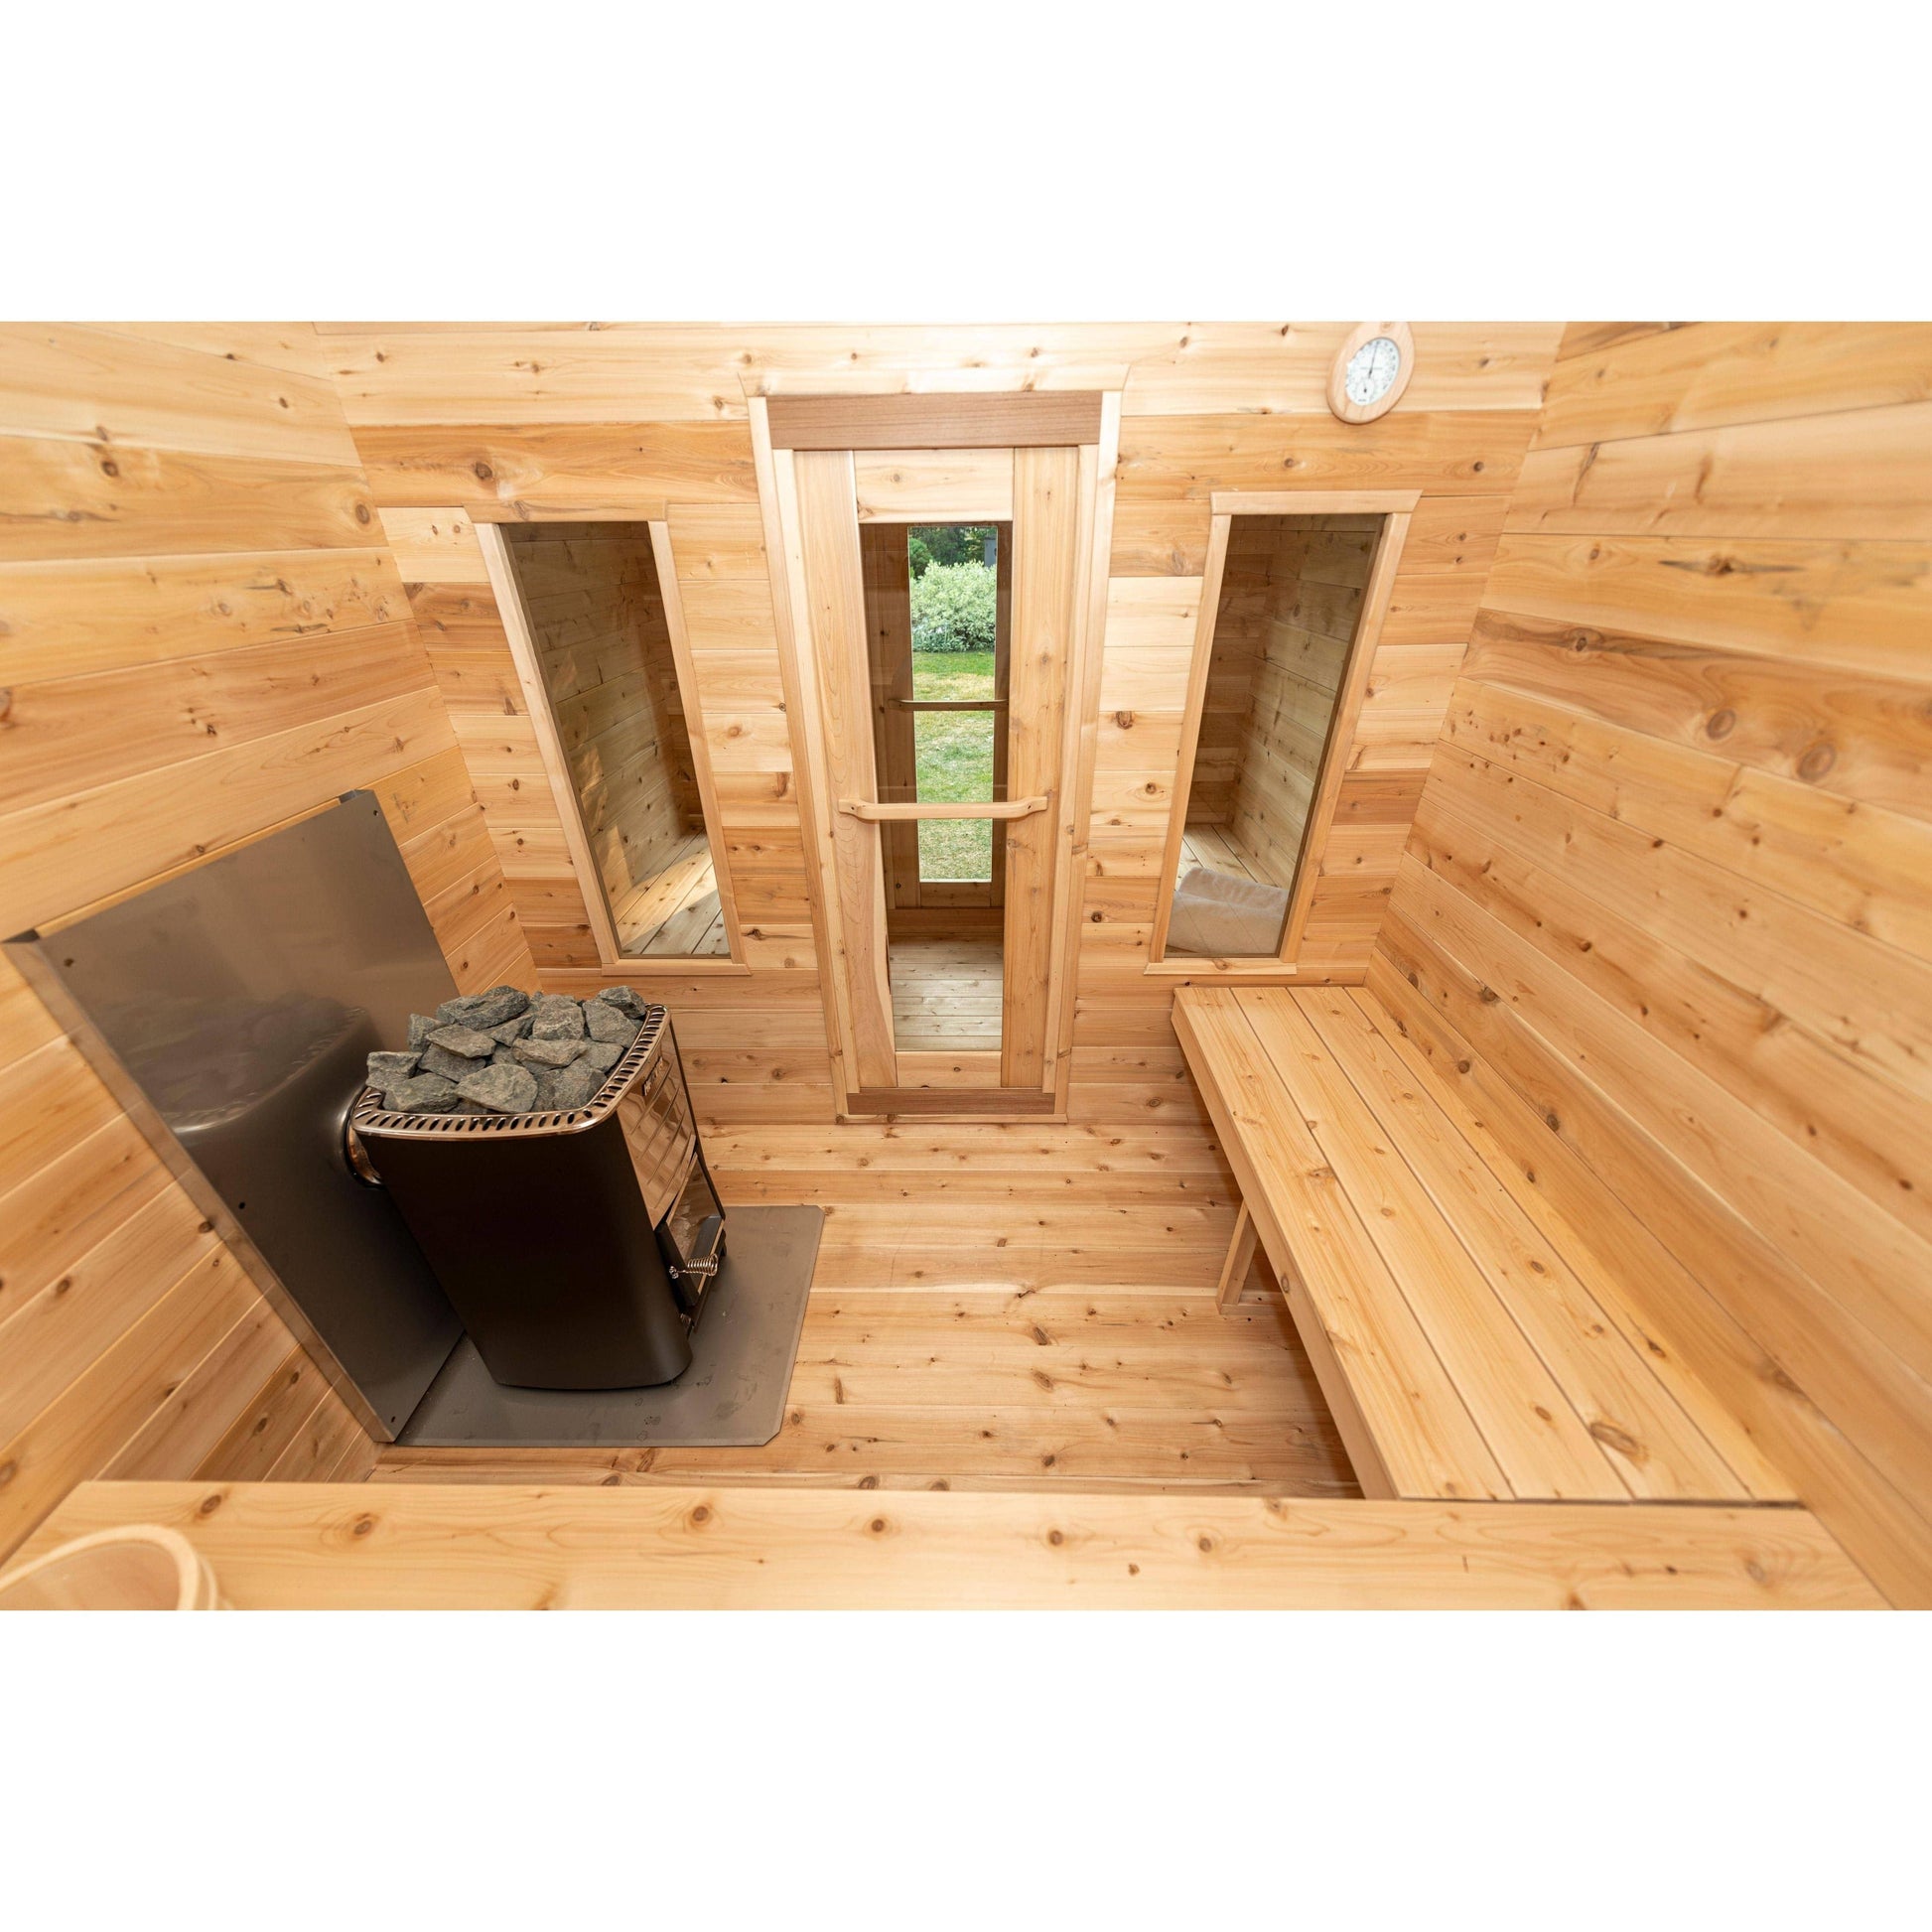 Dundalk Leisurecraft Canadian Timber Georgian Cabin Sauna with Change Room